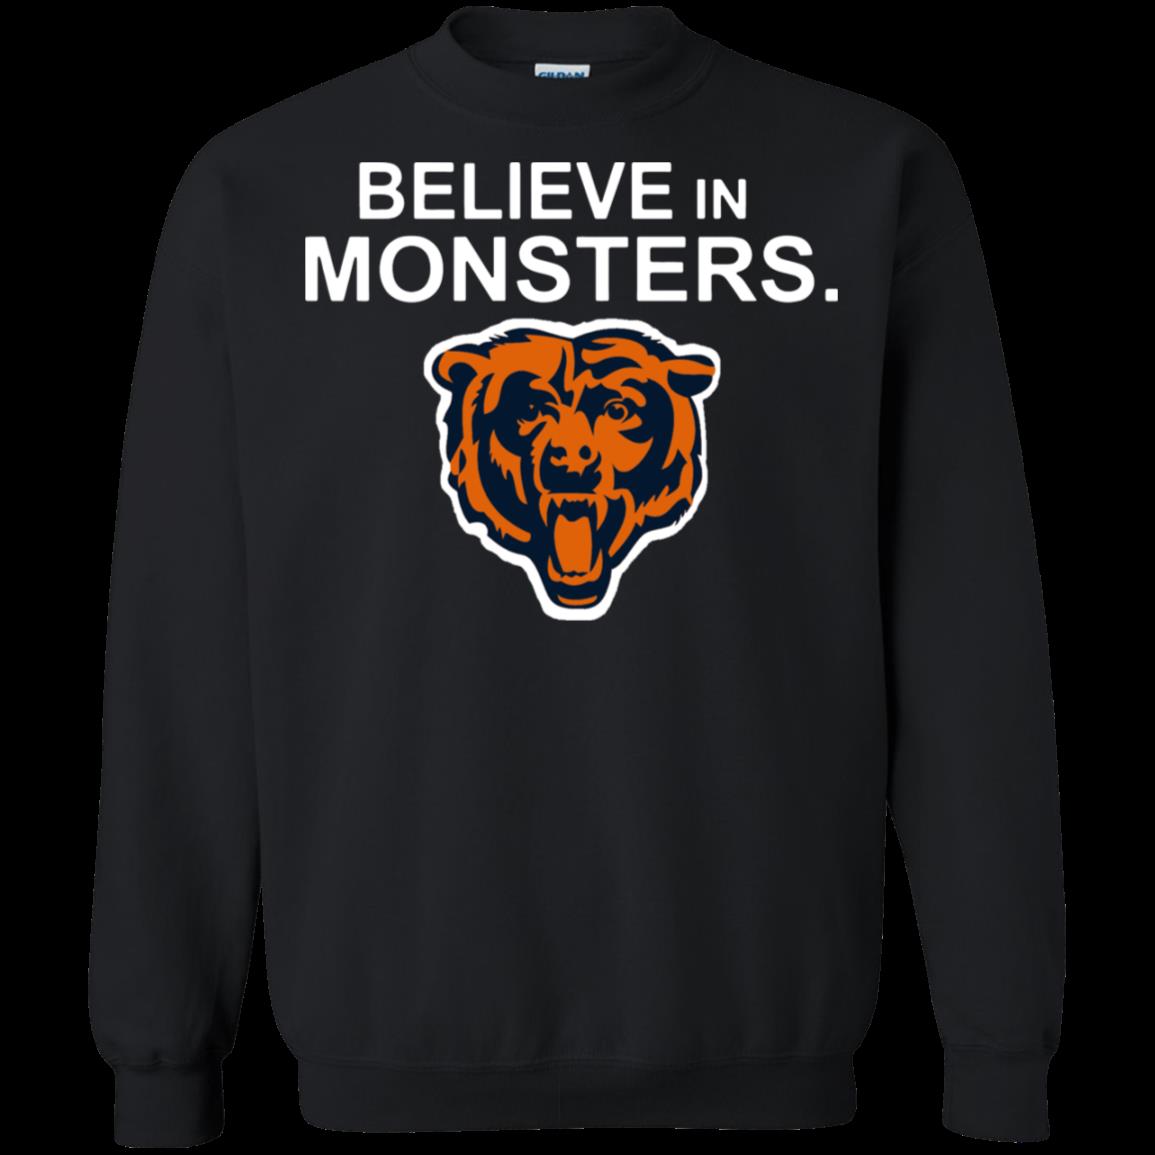 funny chicago bears shirt